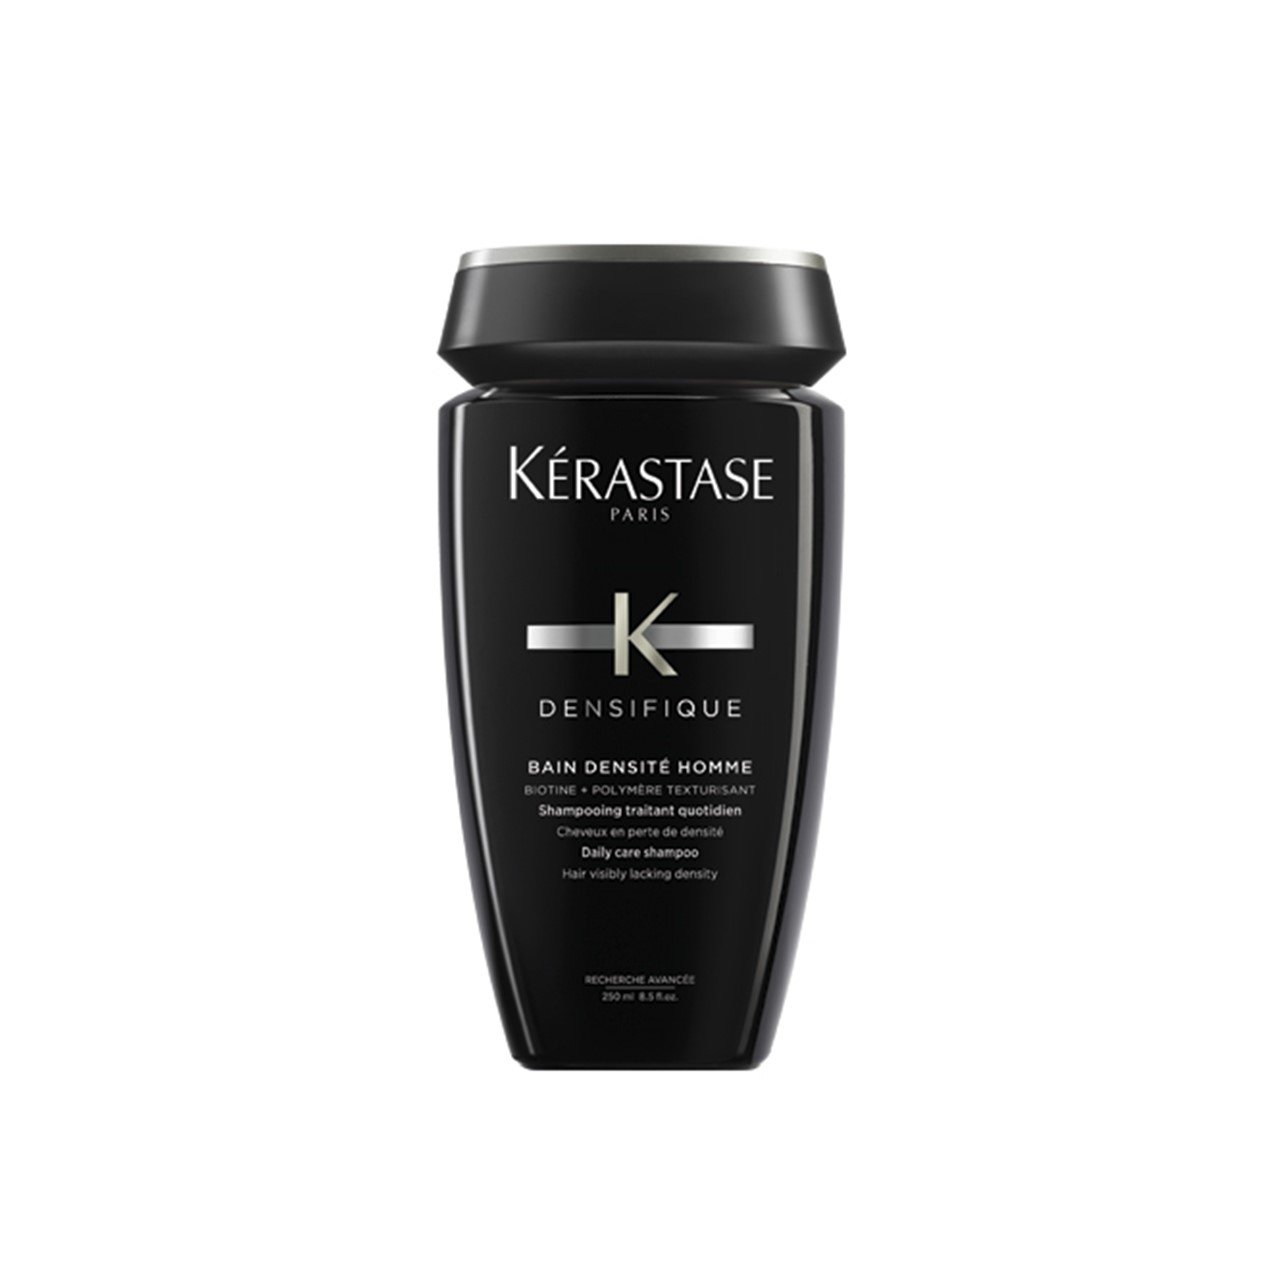 Kérastase Densifique Bain Homme Shampoo 250ml (8.45fl oz) ·